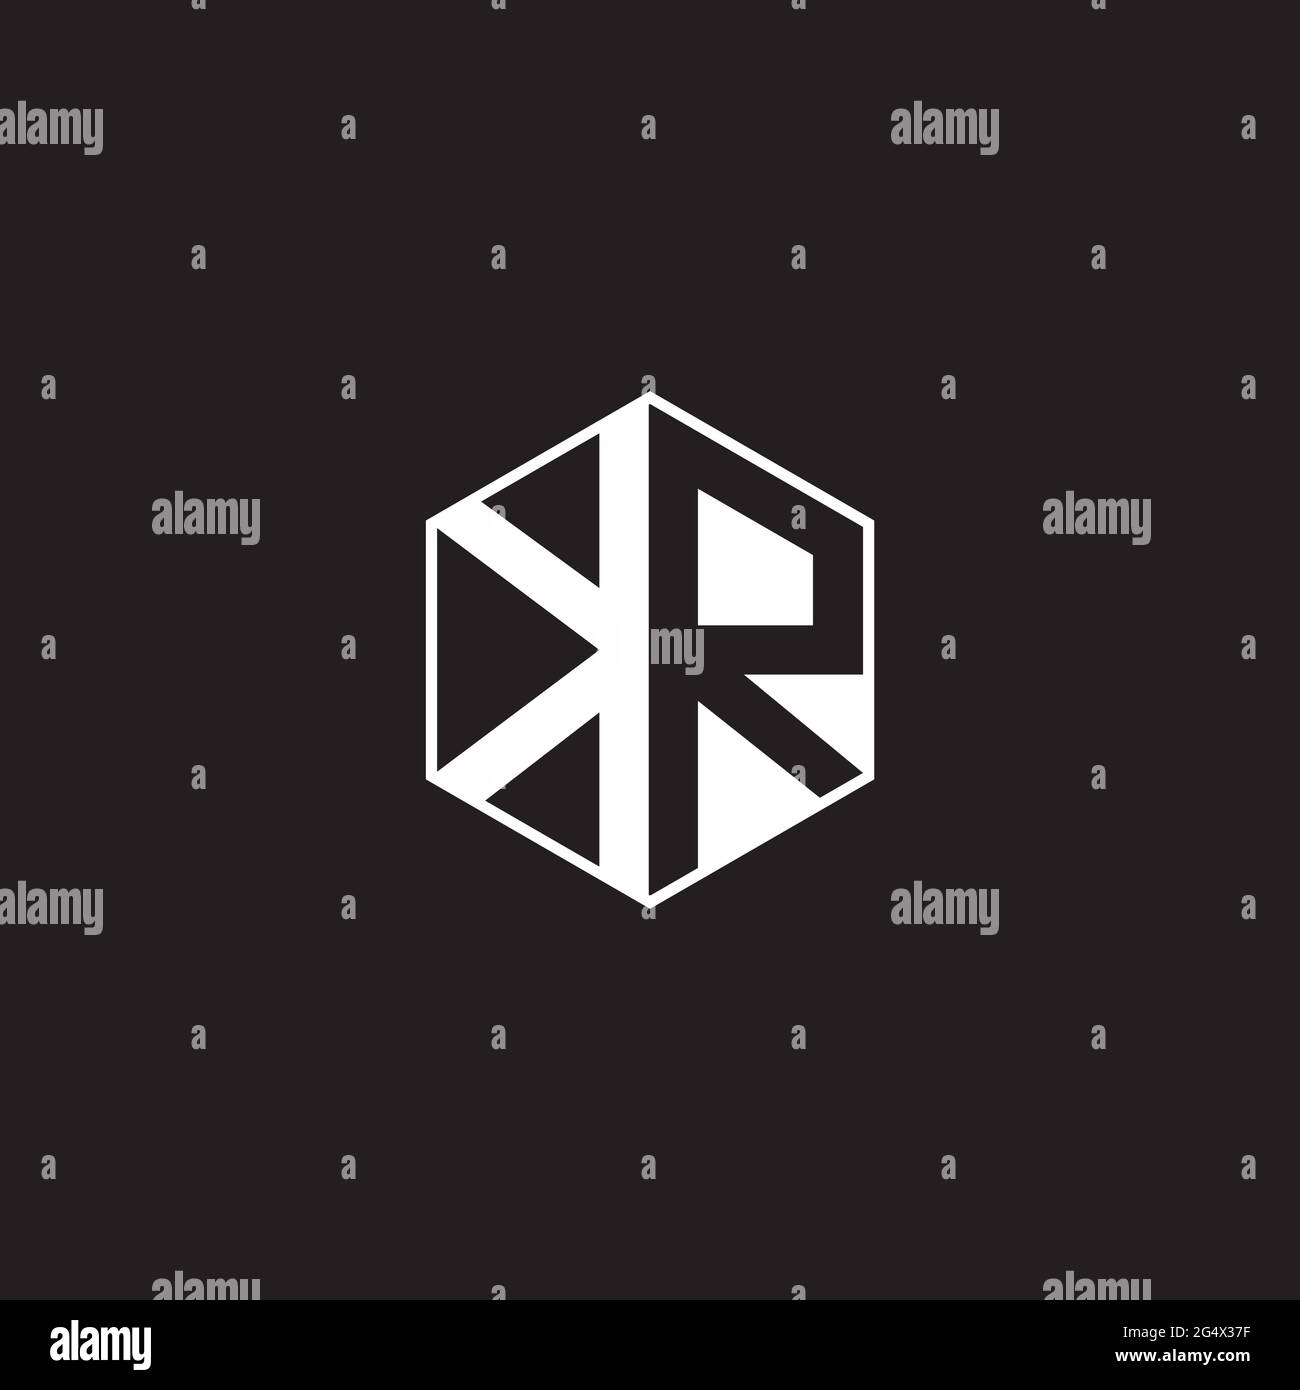 KR K R RK Logo monogram hexagon with black background negative space style Stock Vector